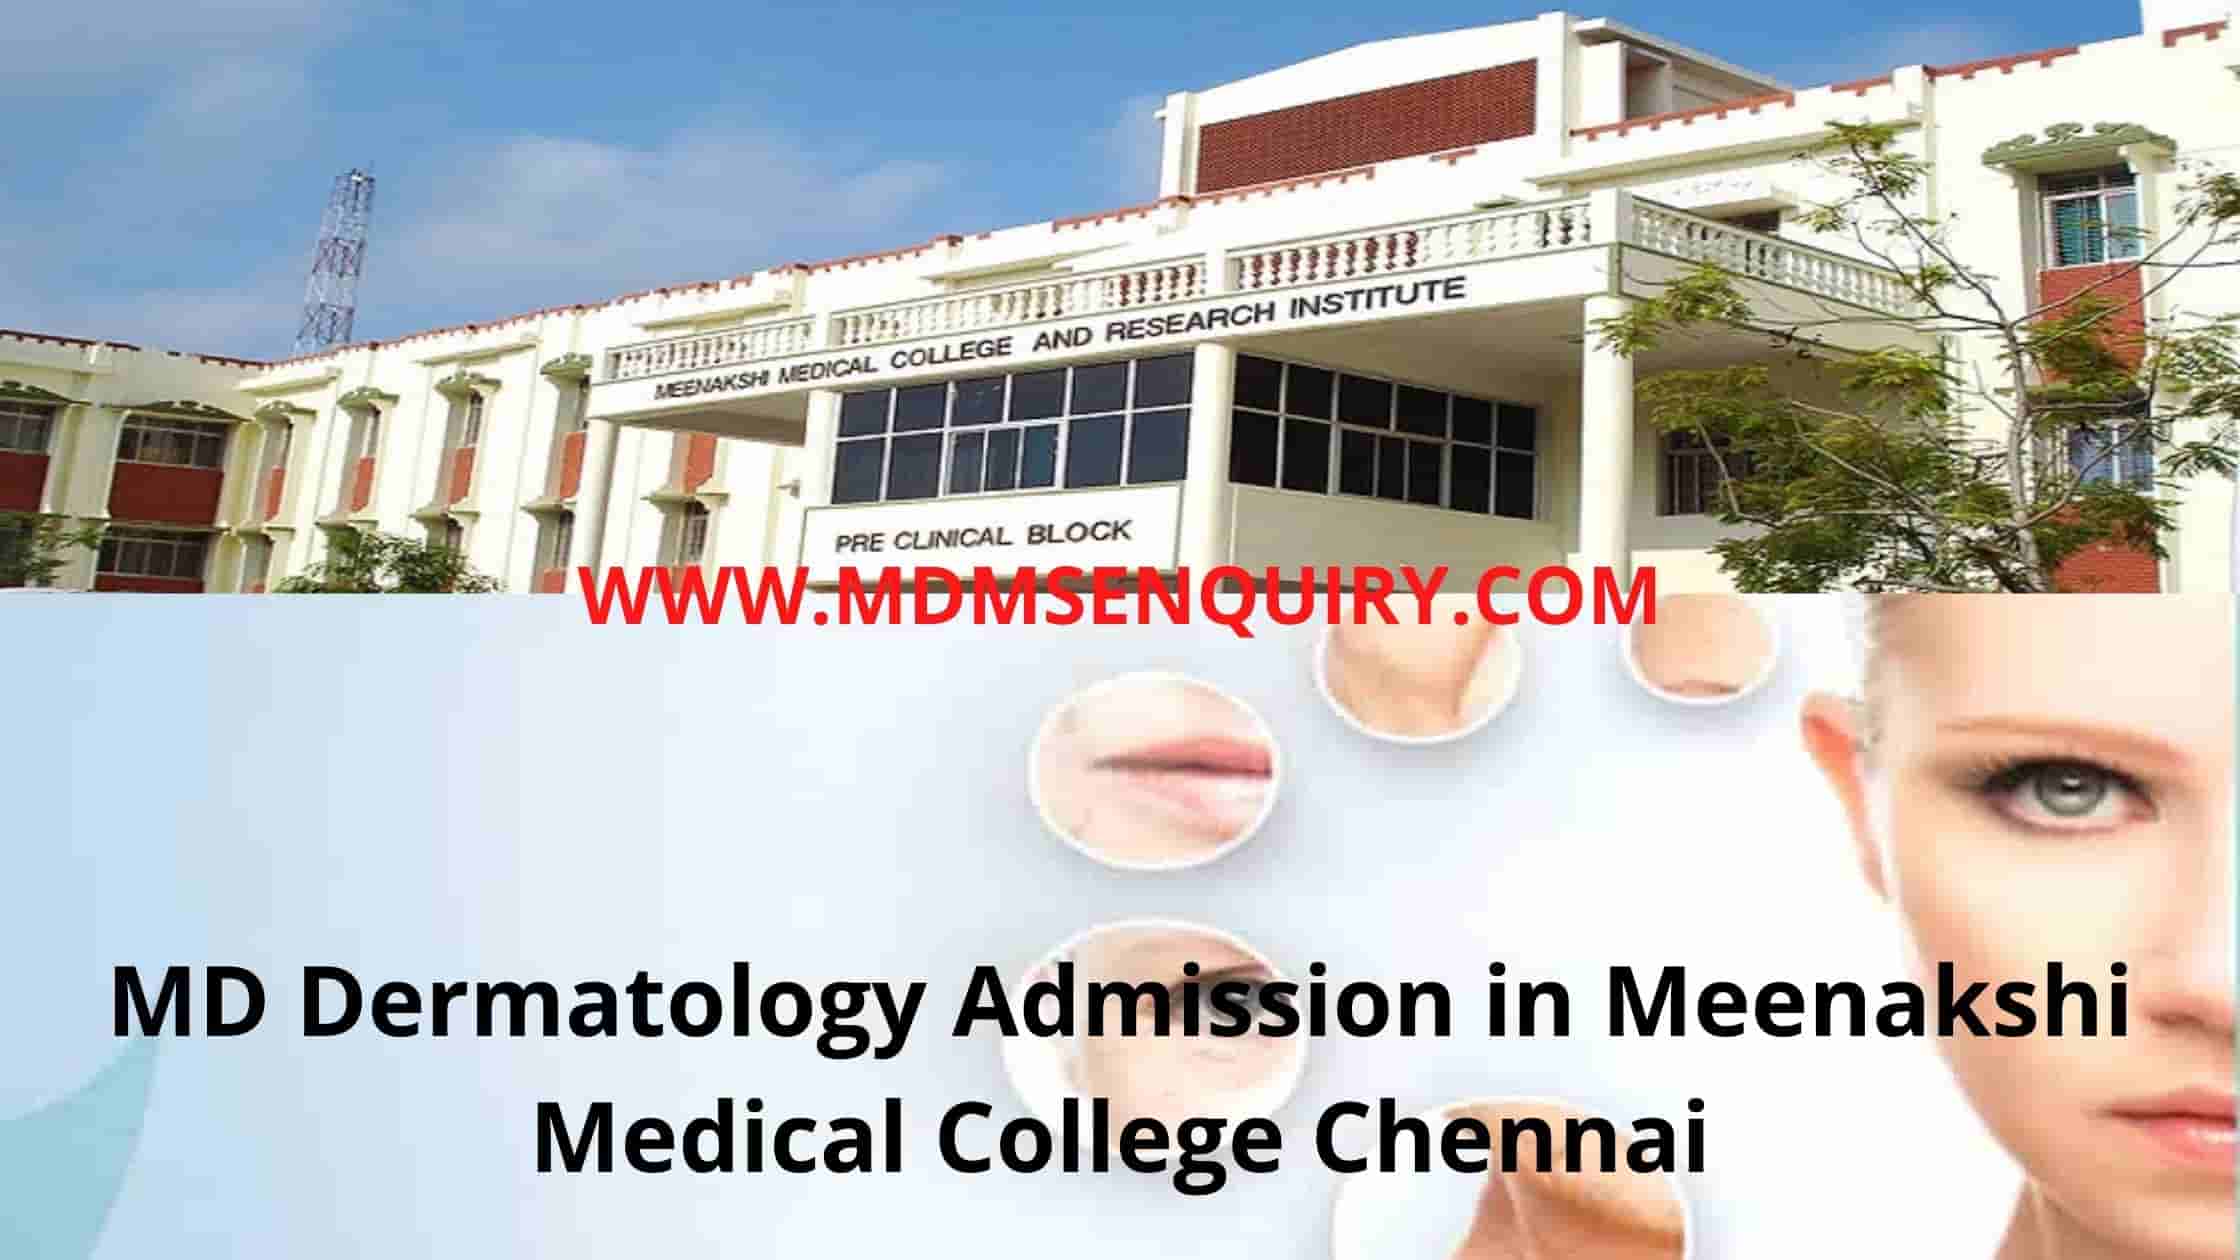 MD Dermatology admission in Meenakshi Medical College Chennai